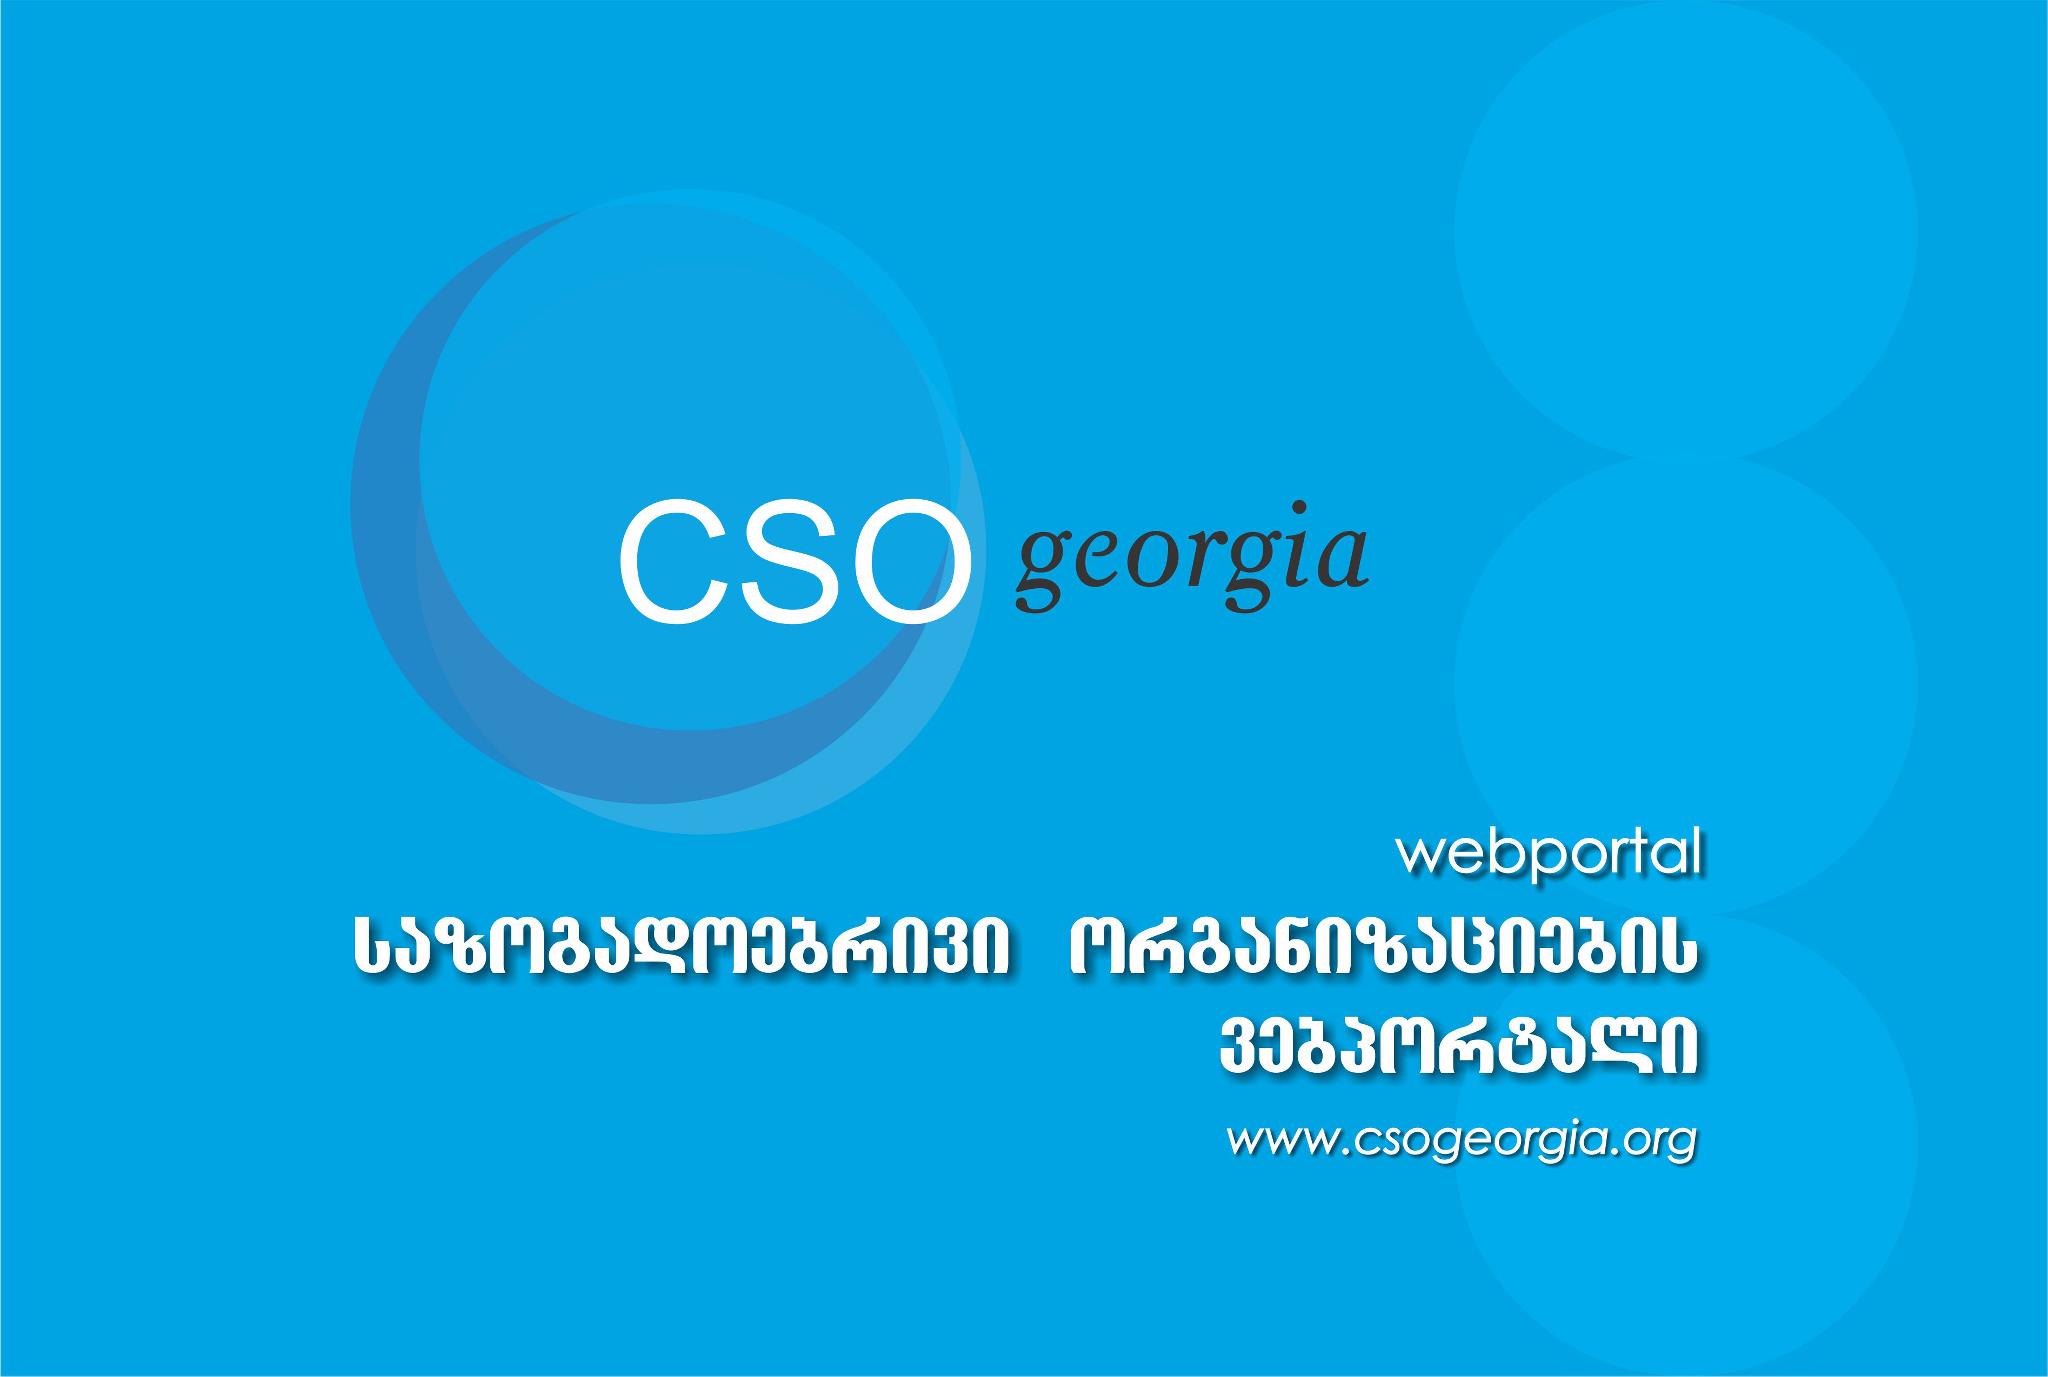 CSOGEORGIA.ORG - Customer Survey 